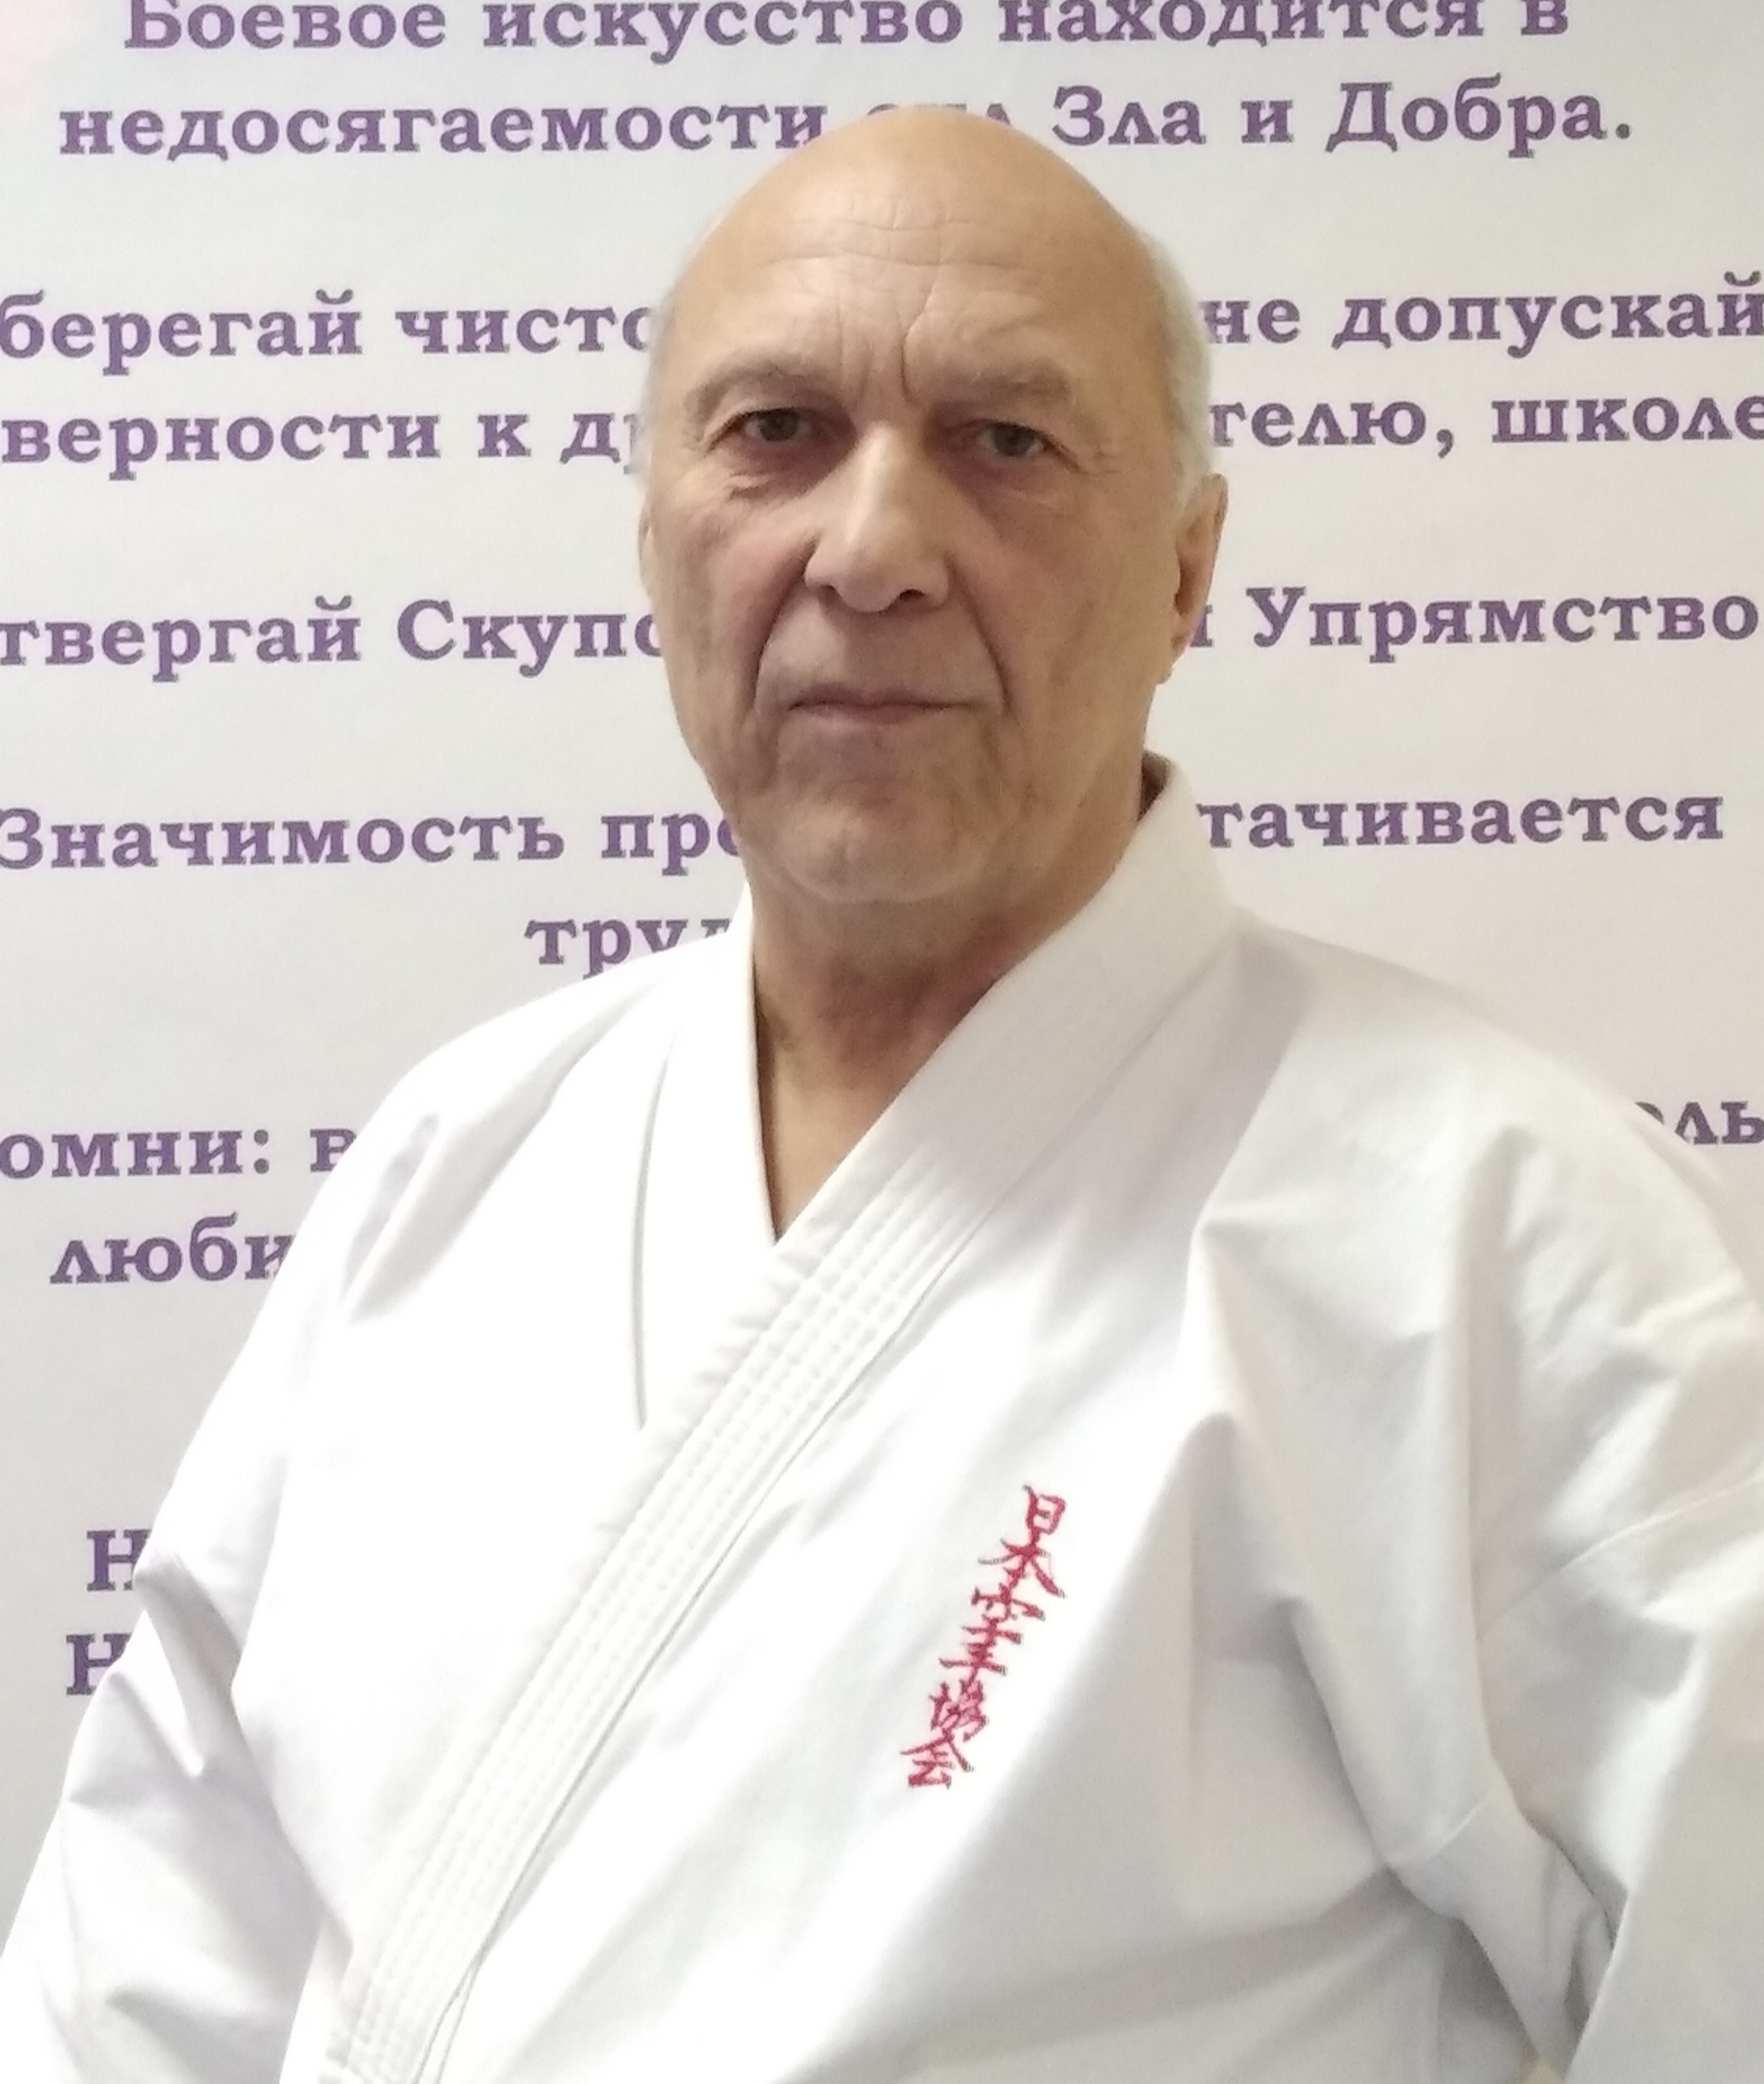 Владимир Владимирович Харламов